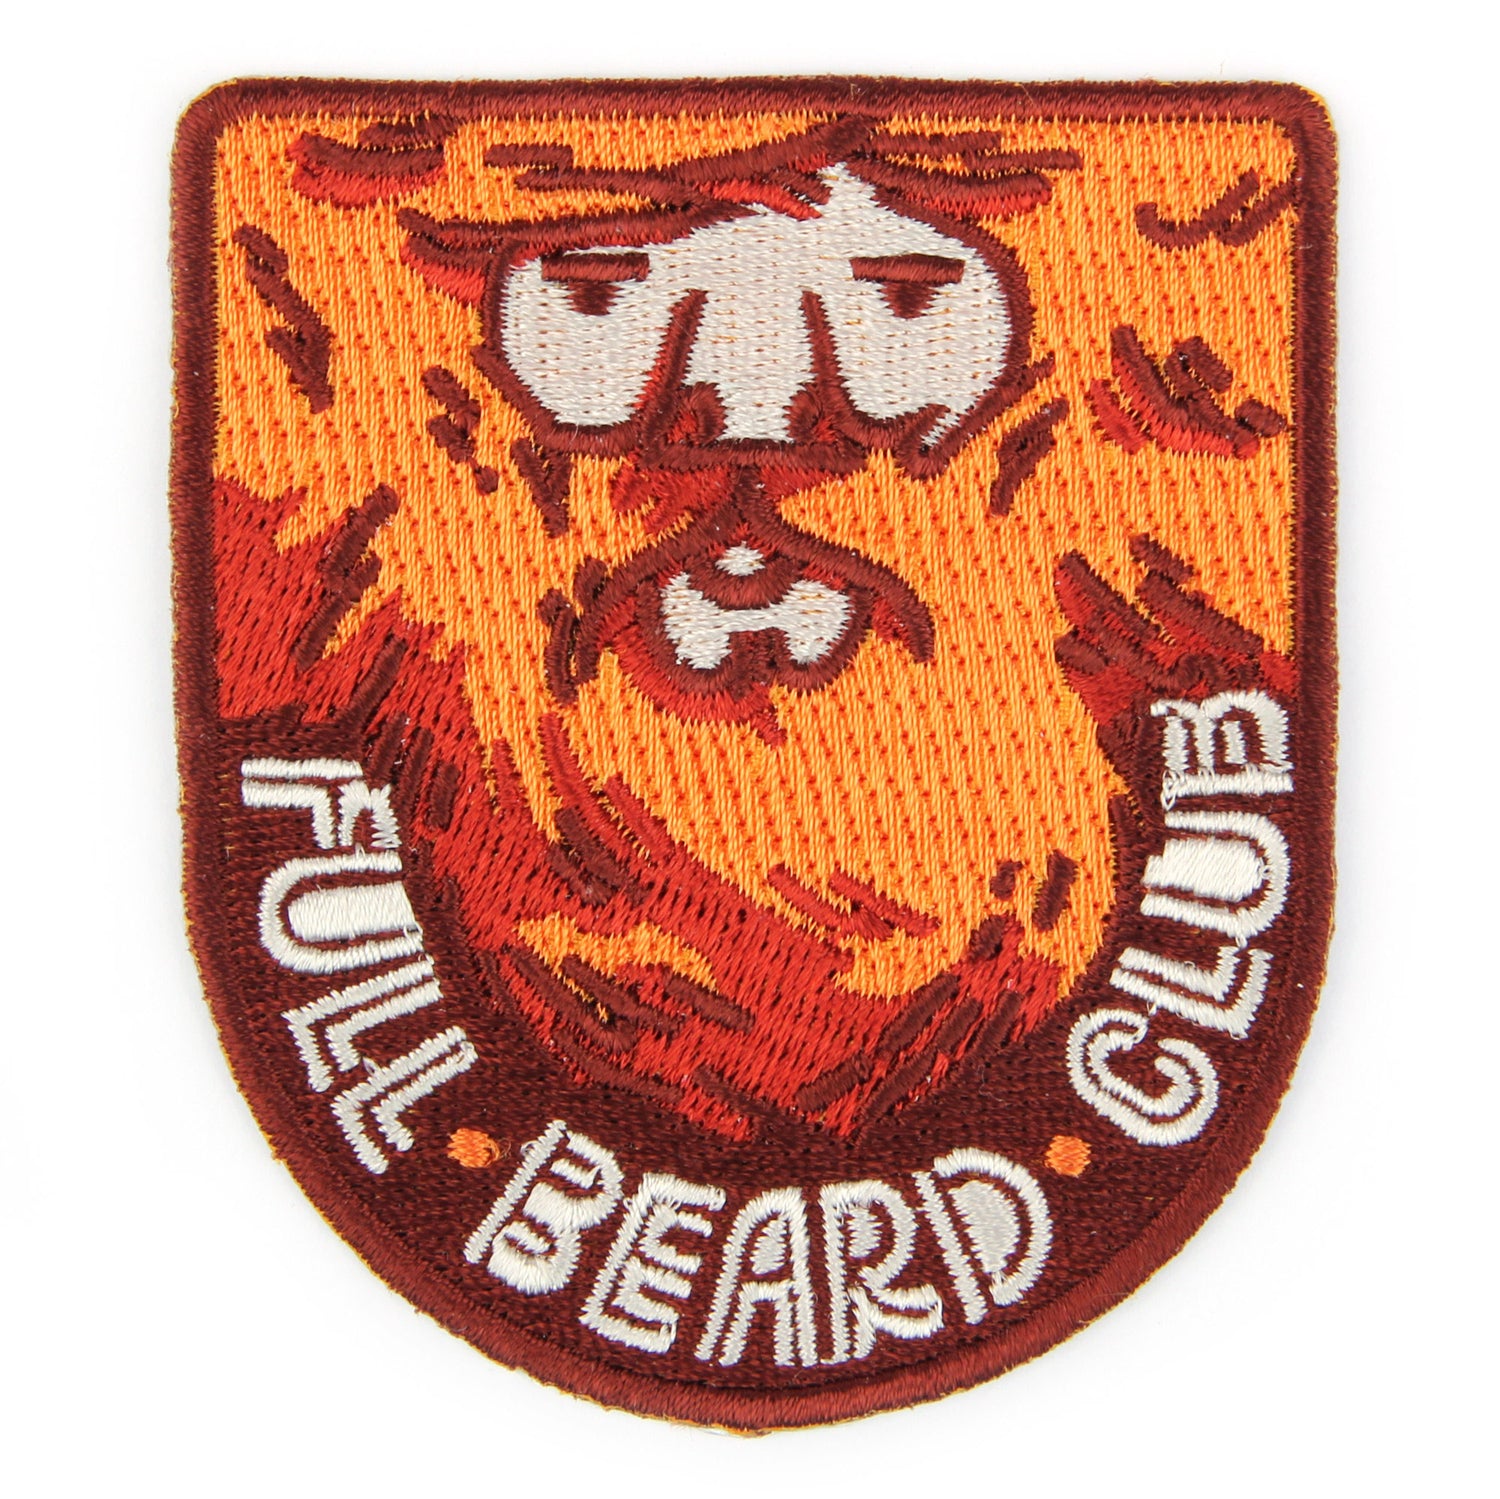 Full Beard Club Patch